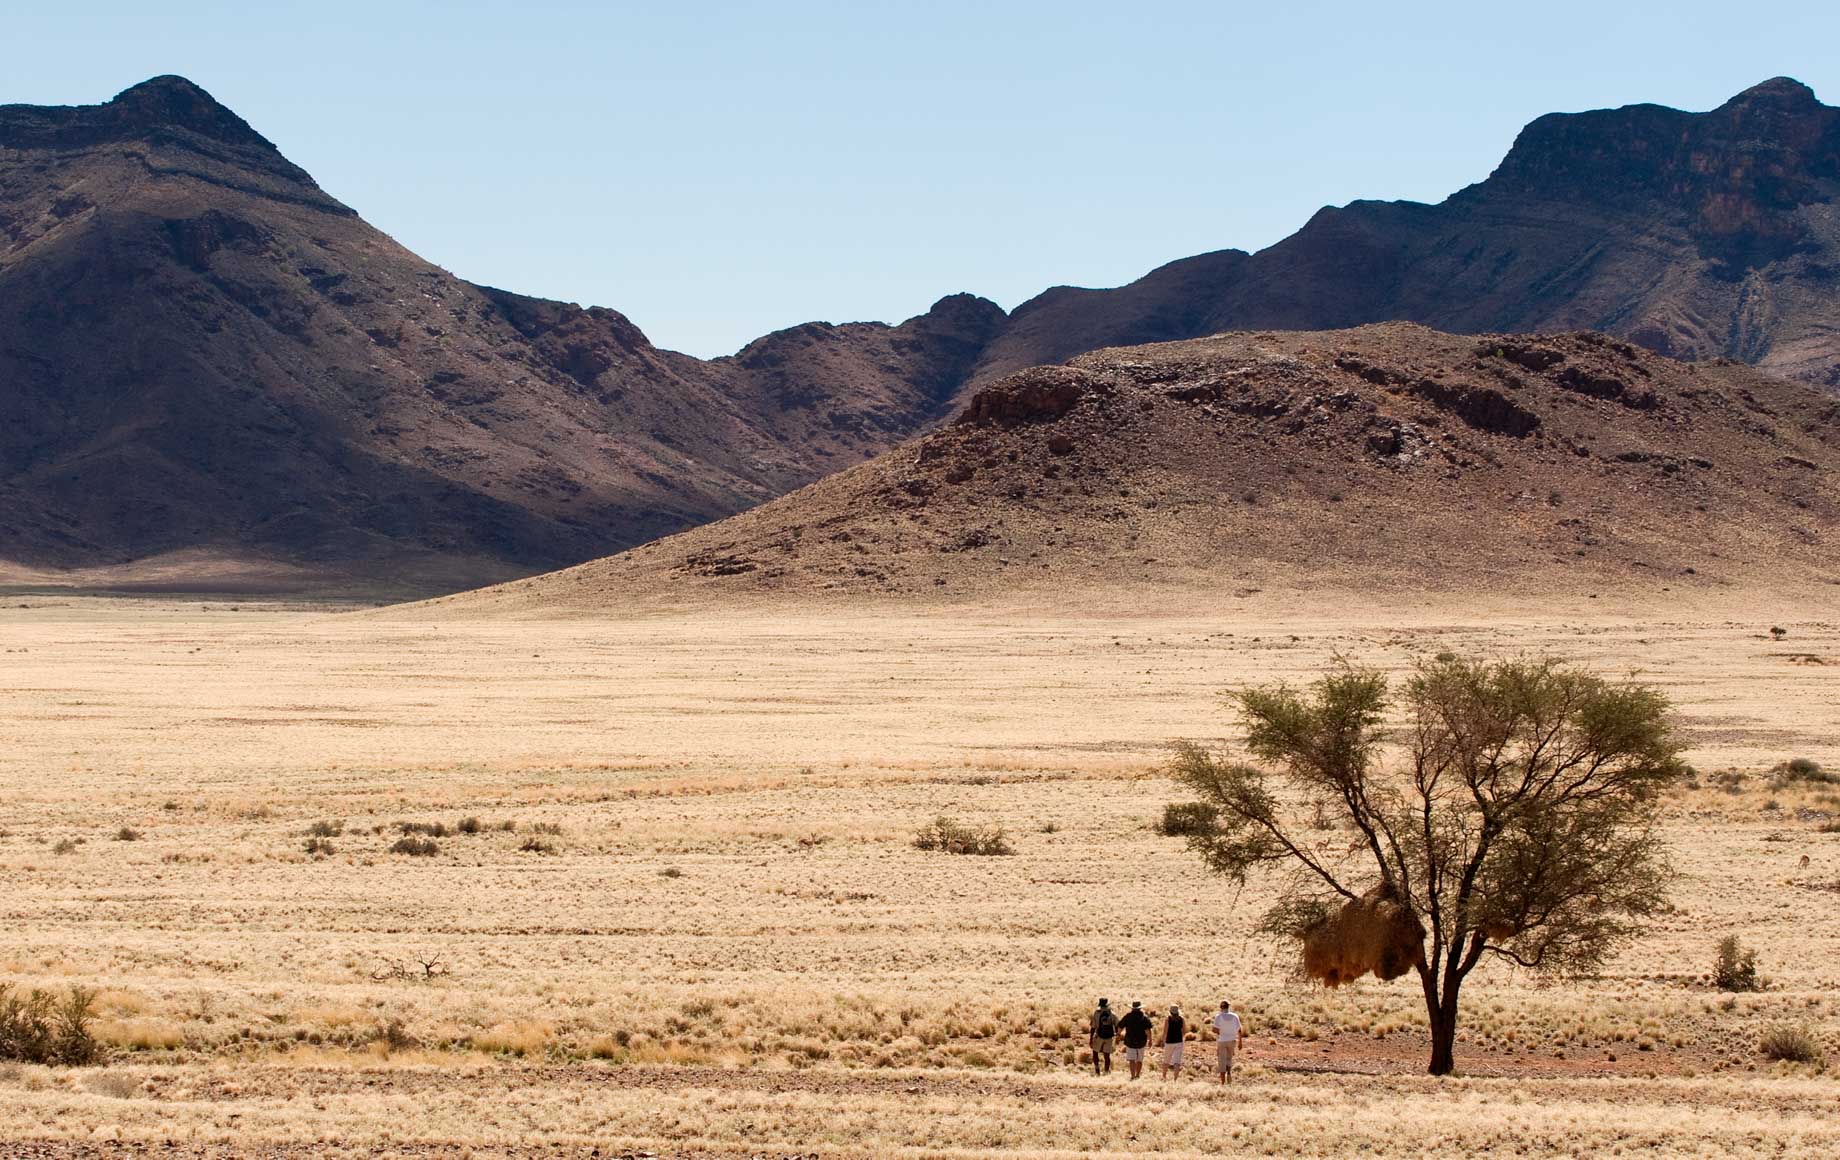 Exploring the Sossuvlei Namib Desert